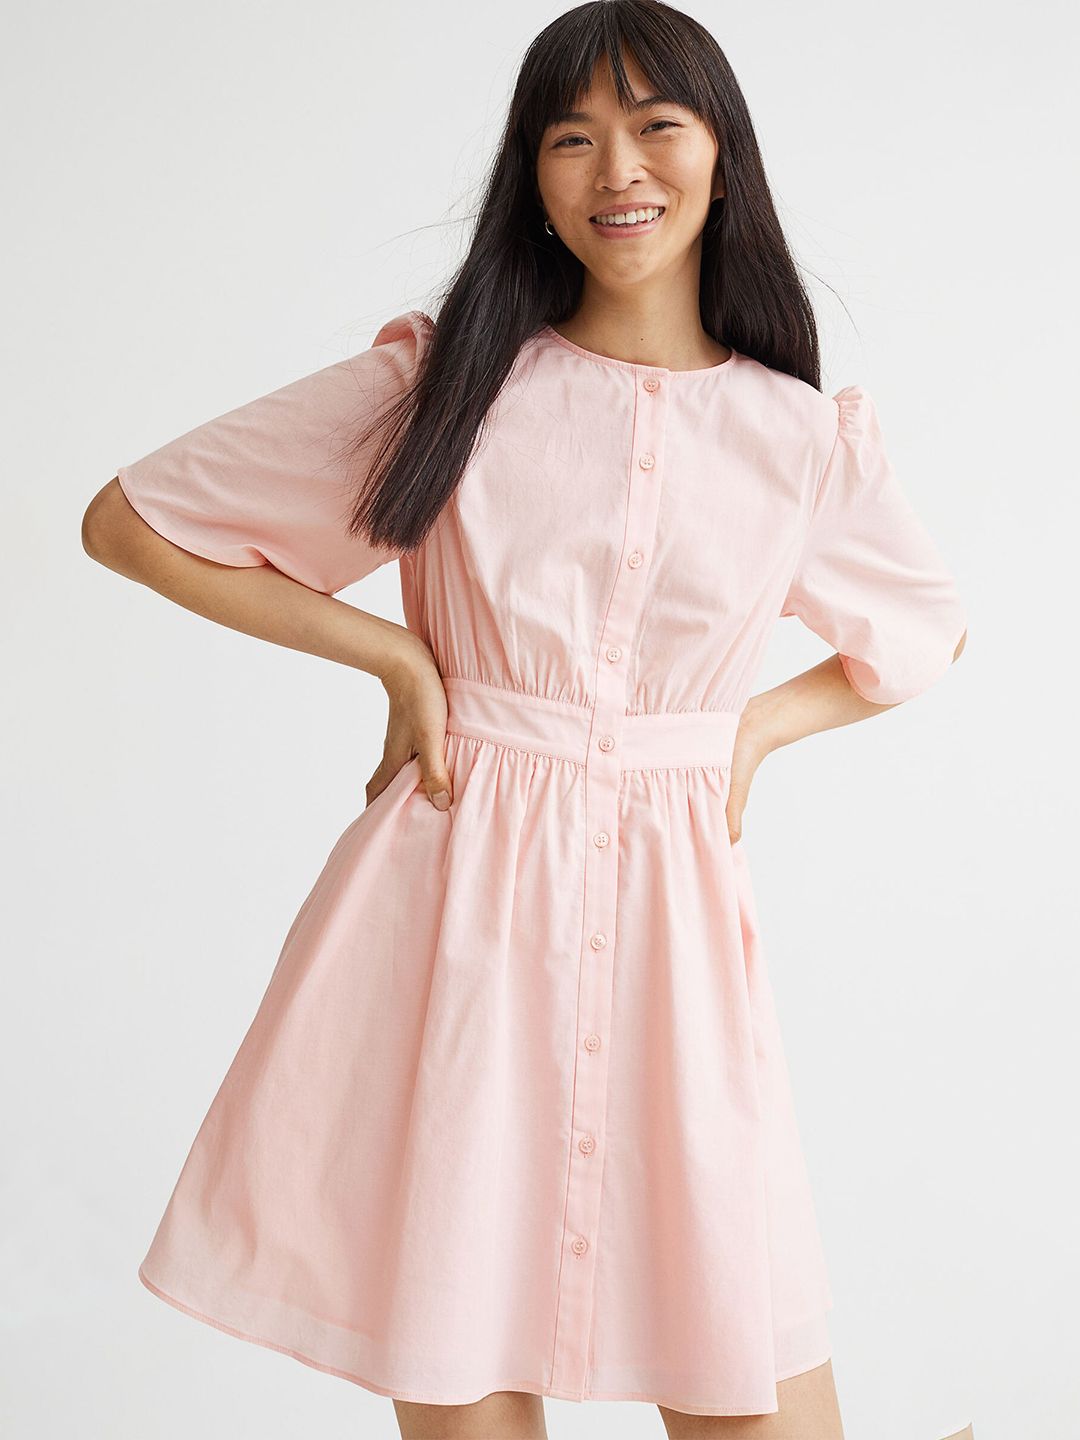 H&M Women Pink Short Cotton Dress Price in India